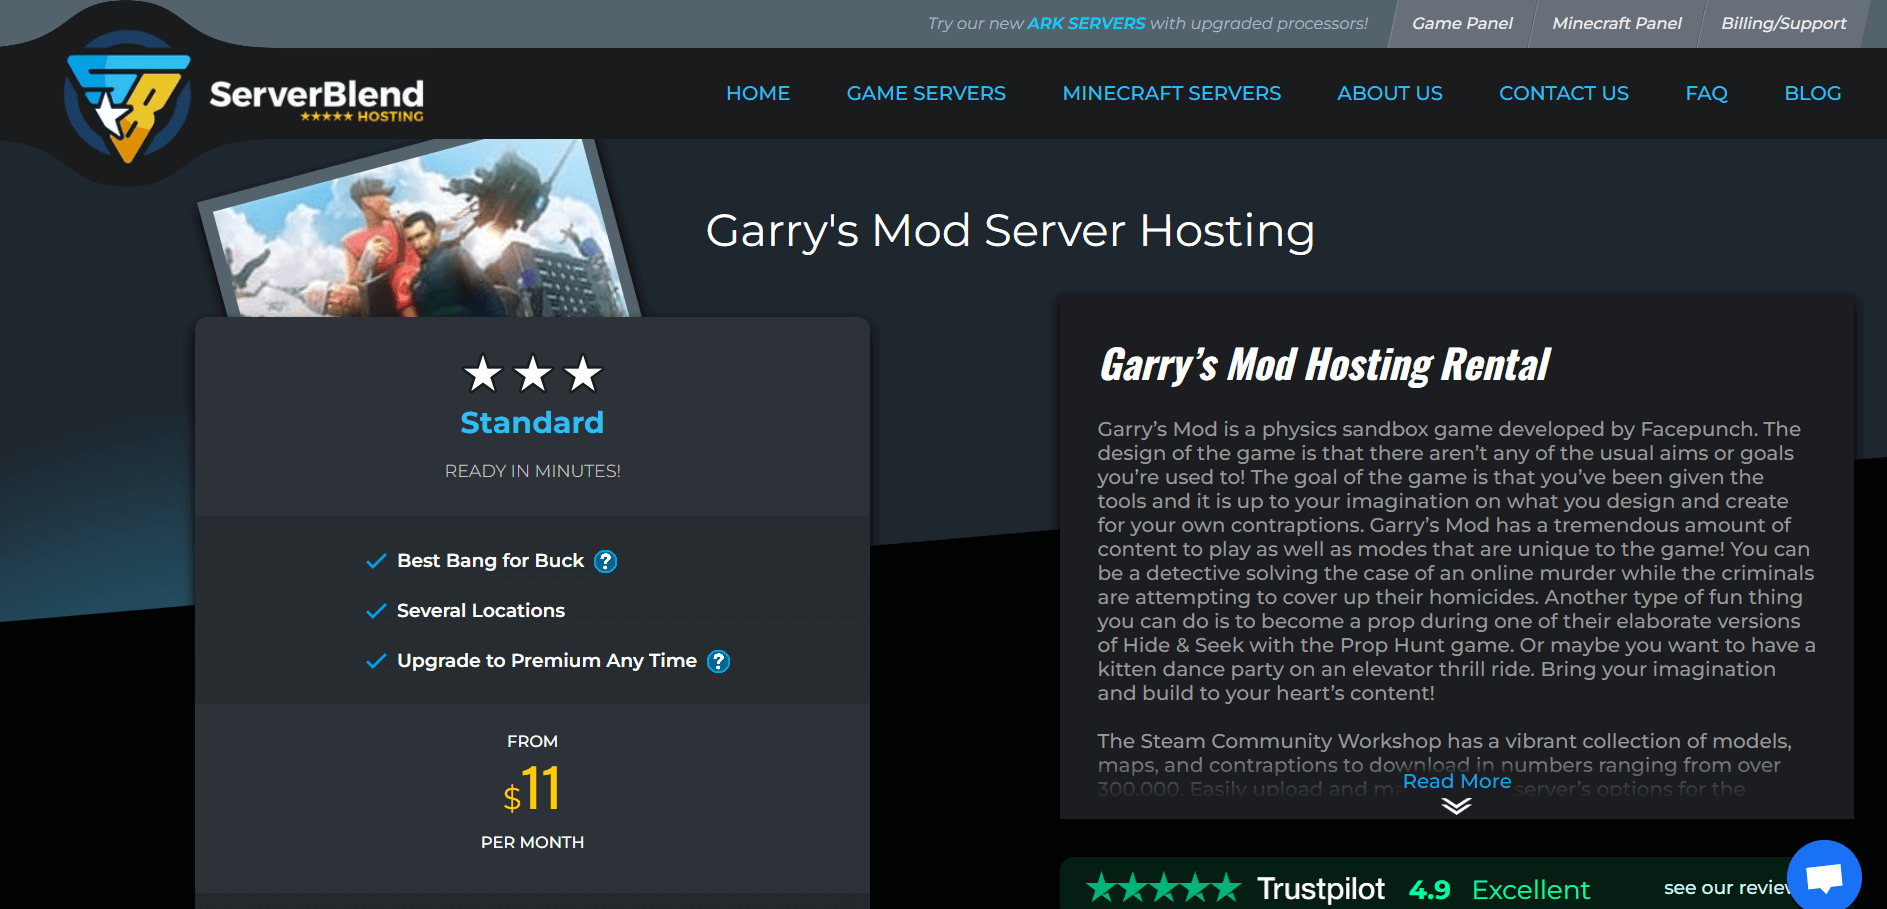 Garry’s Mod server hosting by Serverbland